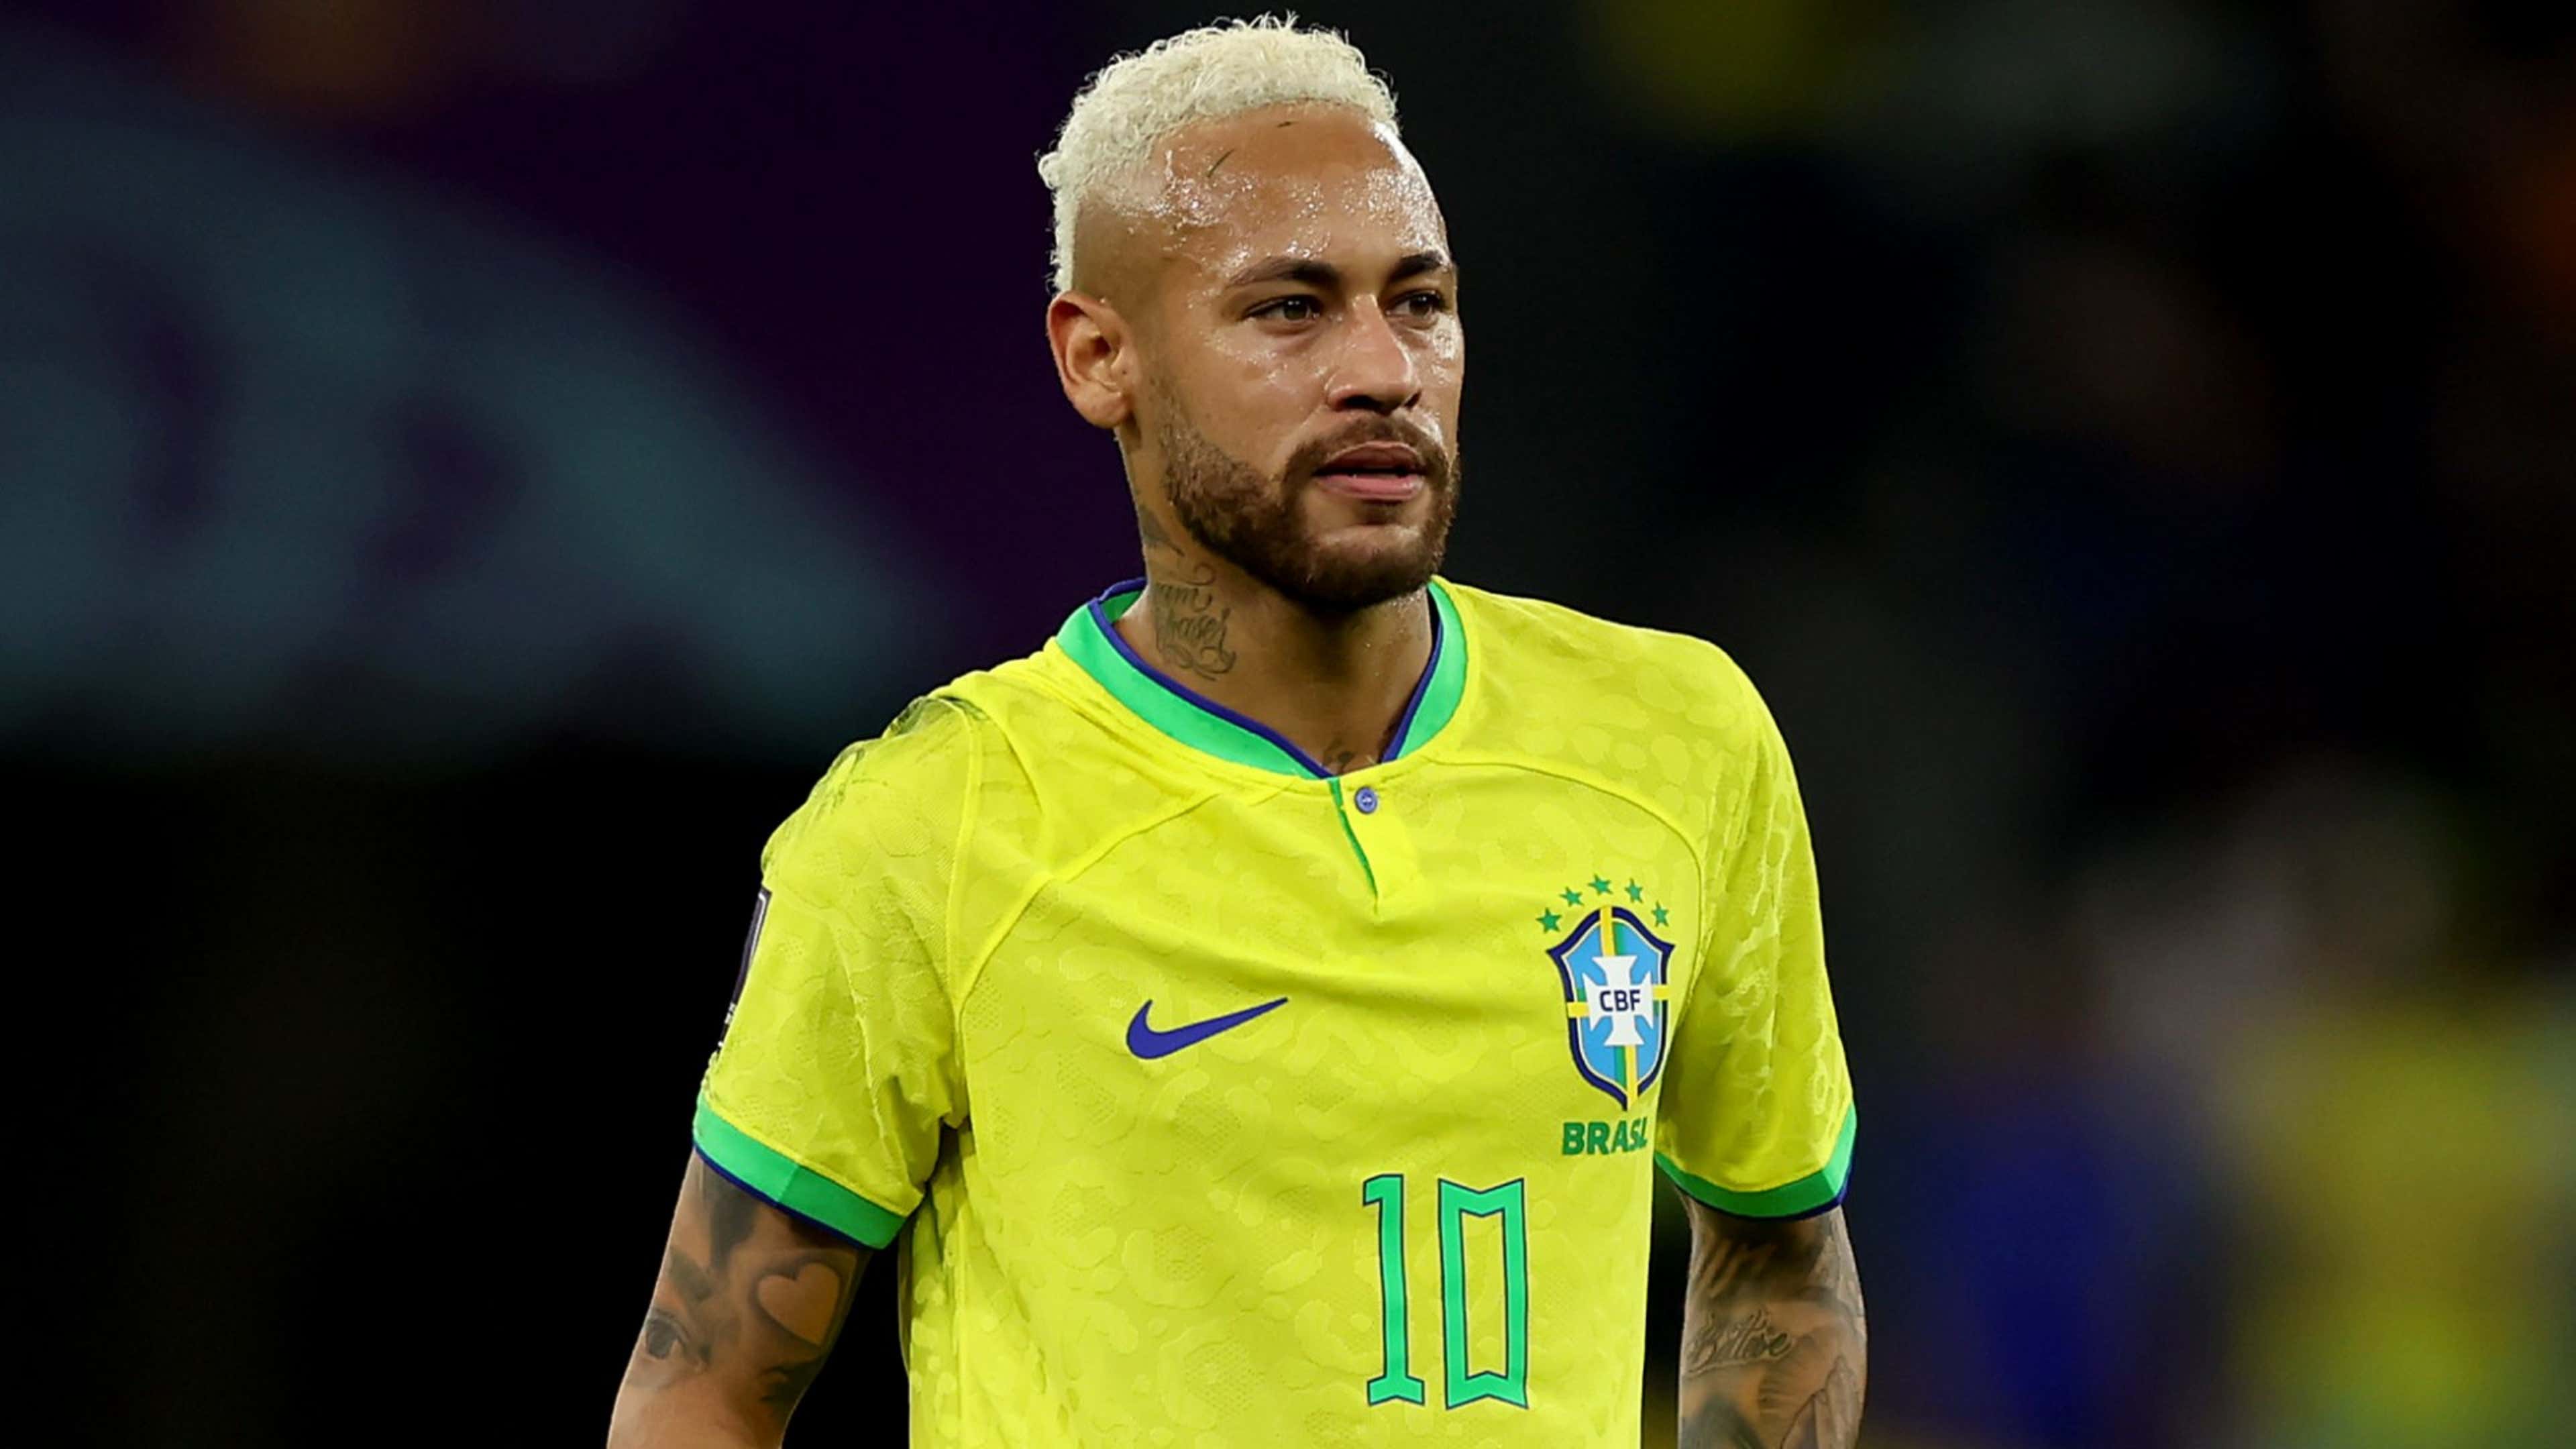 WATCH: Neymar is back in Brazil! Forward returns to homeland ahead